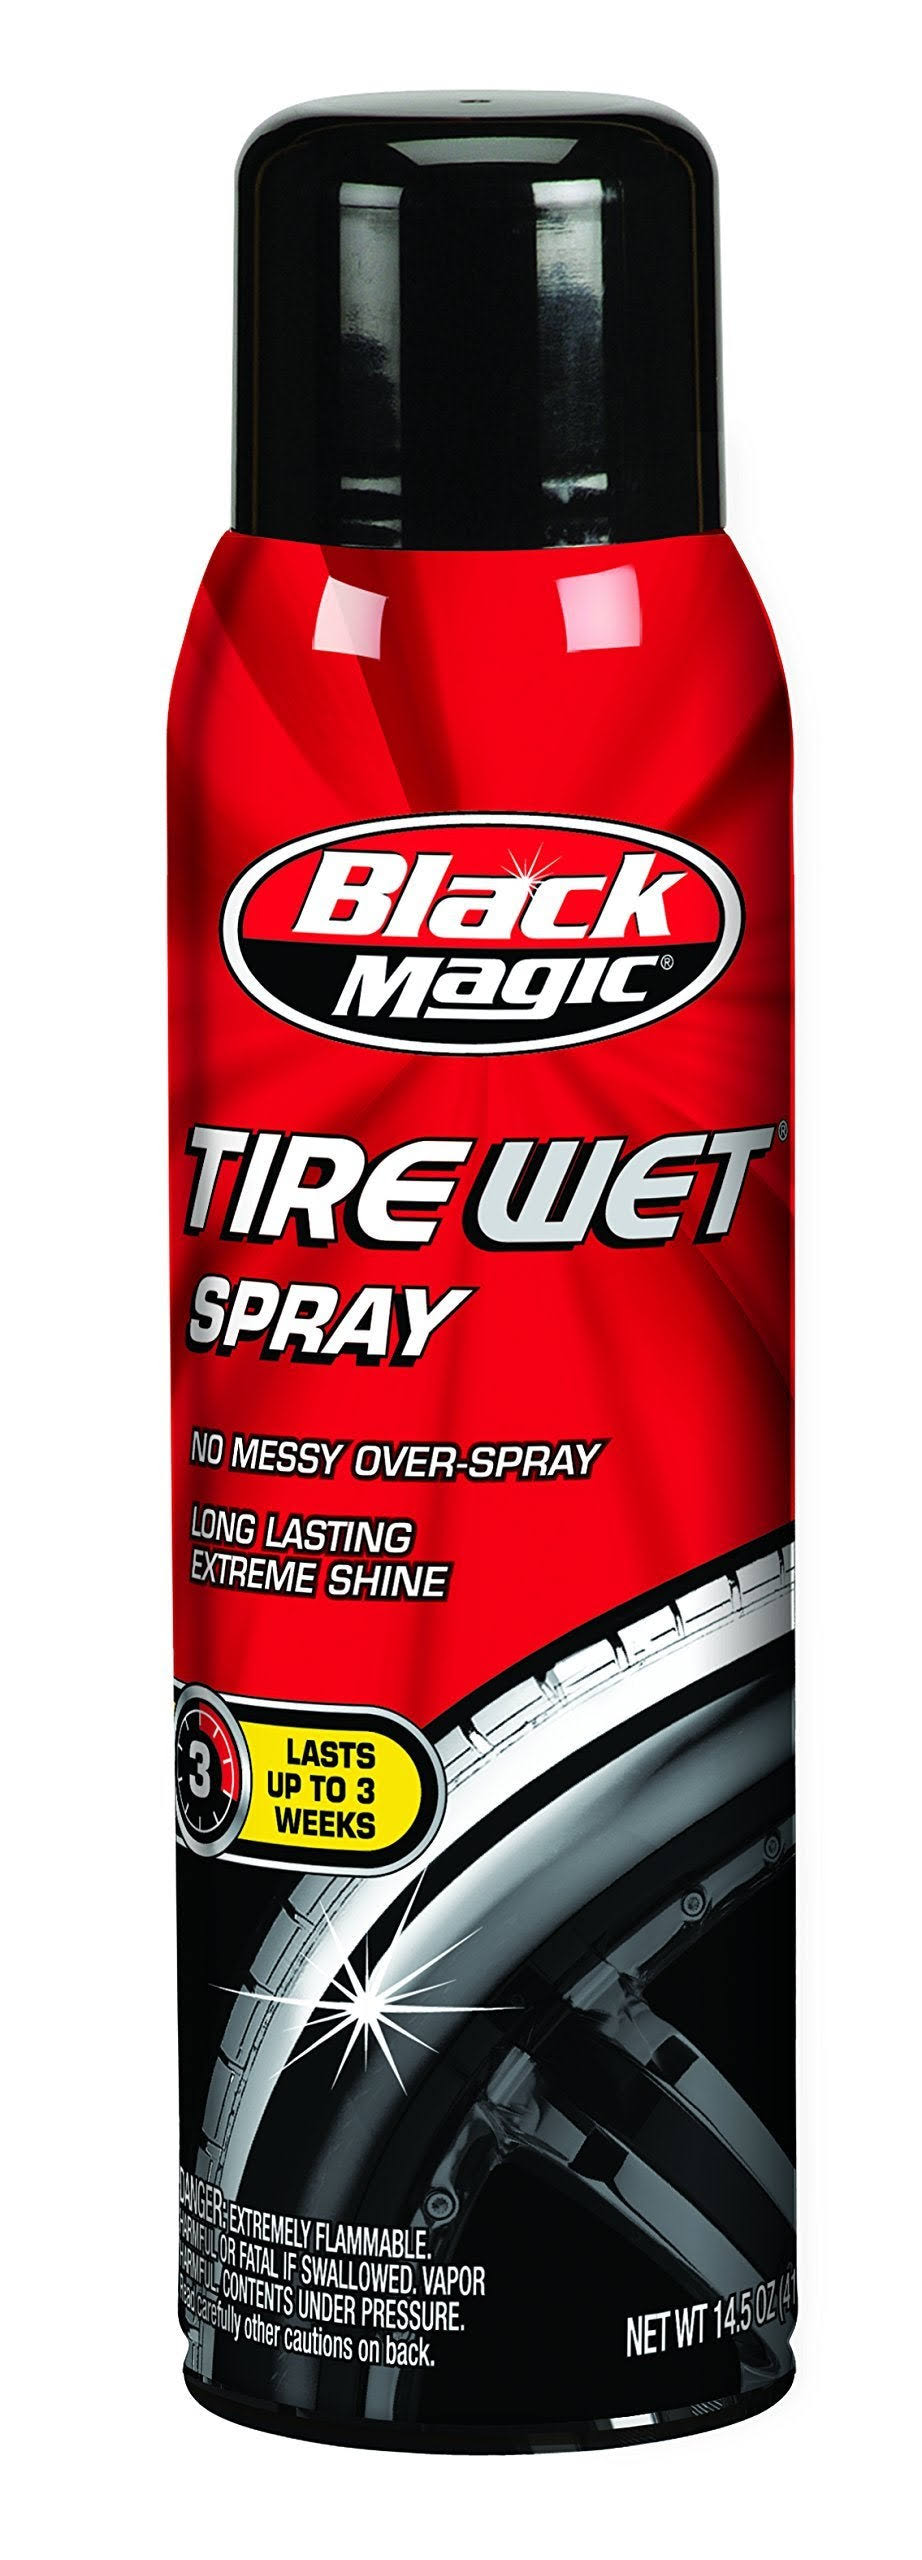 Black Magic Tire Wet Spray - 14.5oz